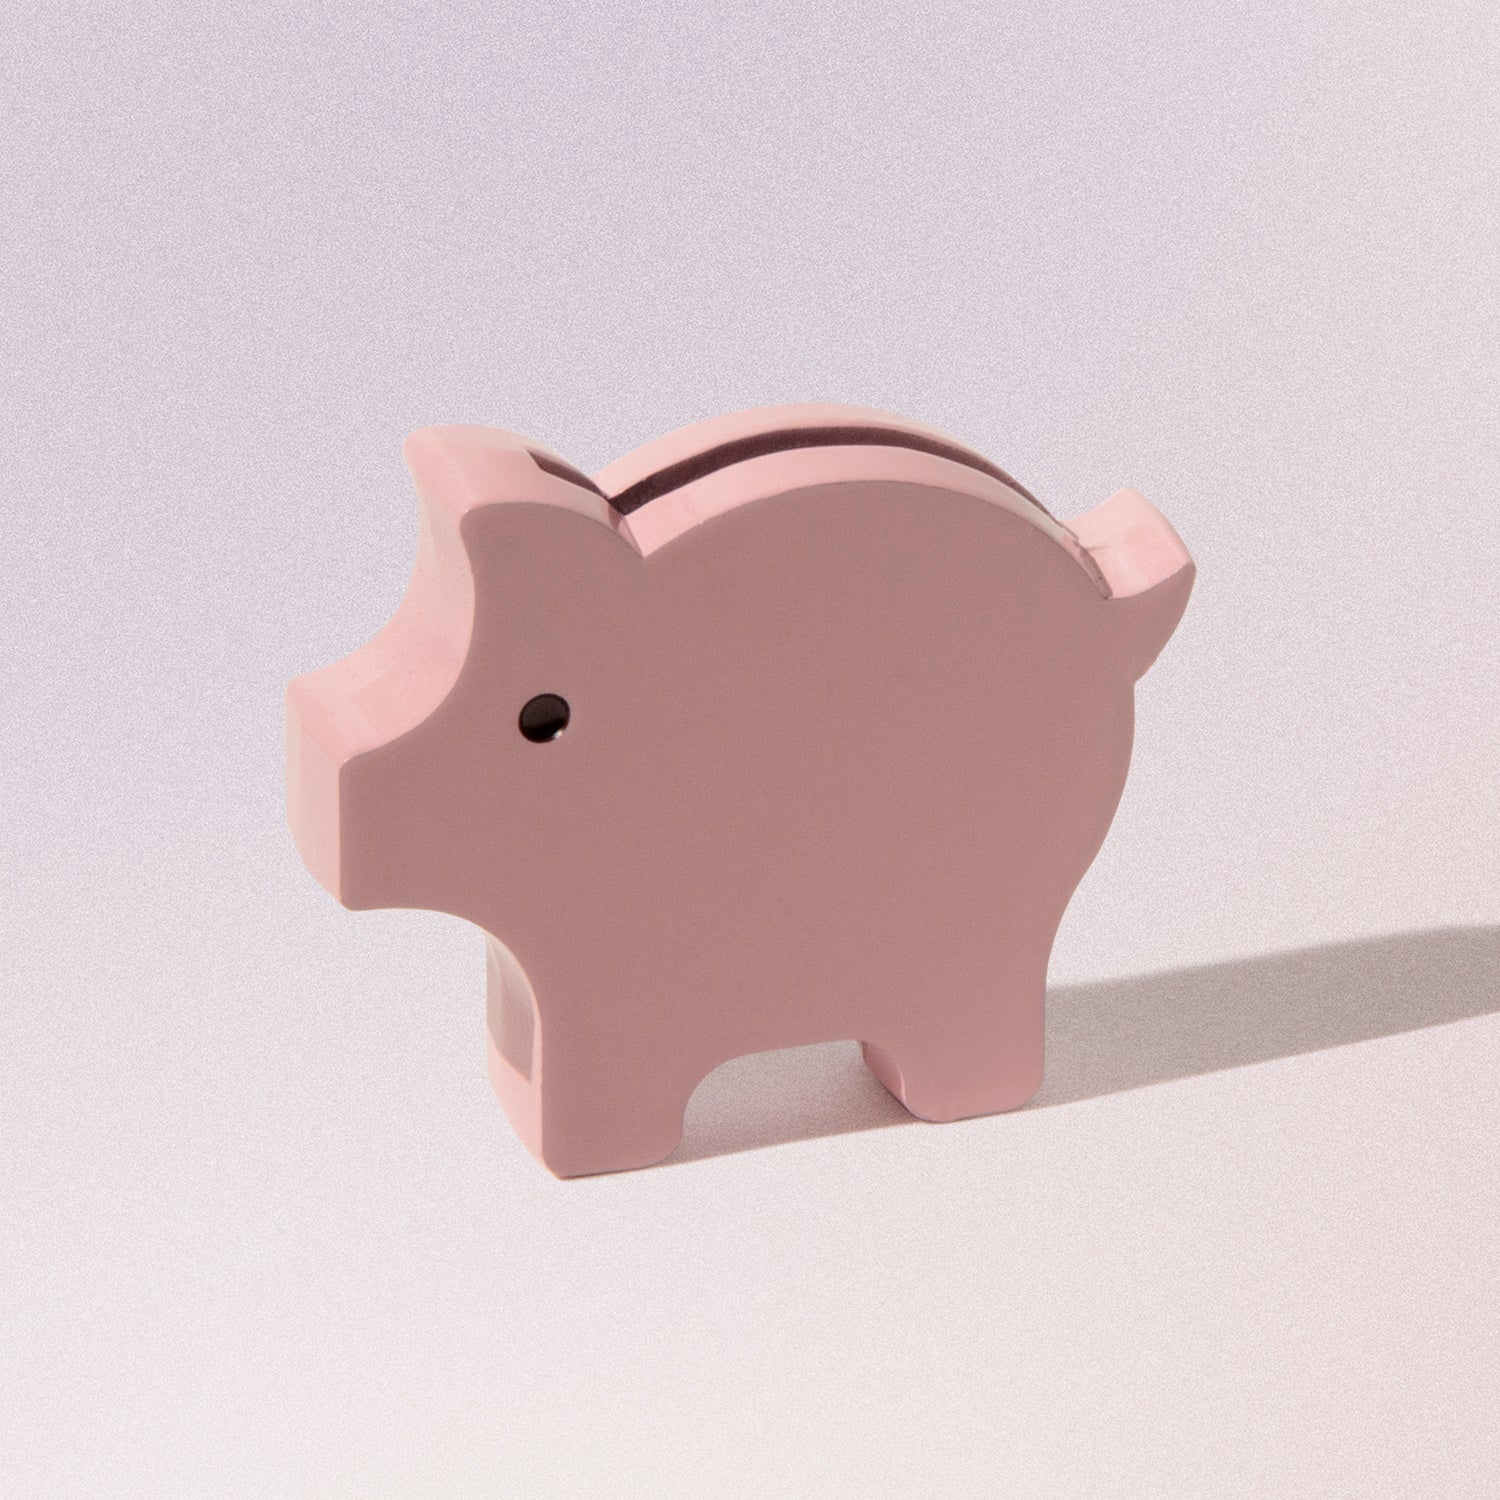 mini piggy bank only fits a quarter